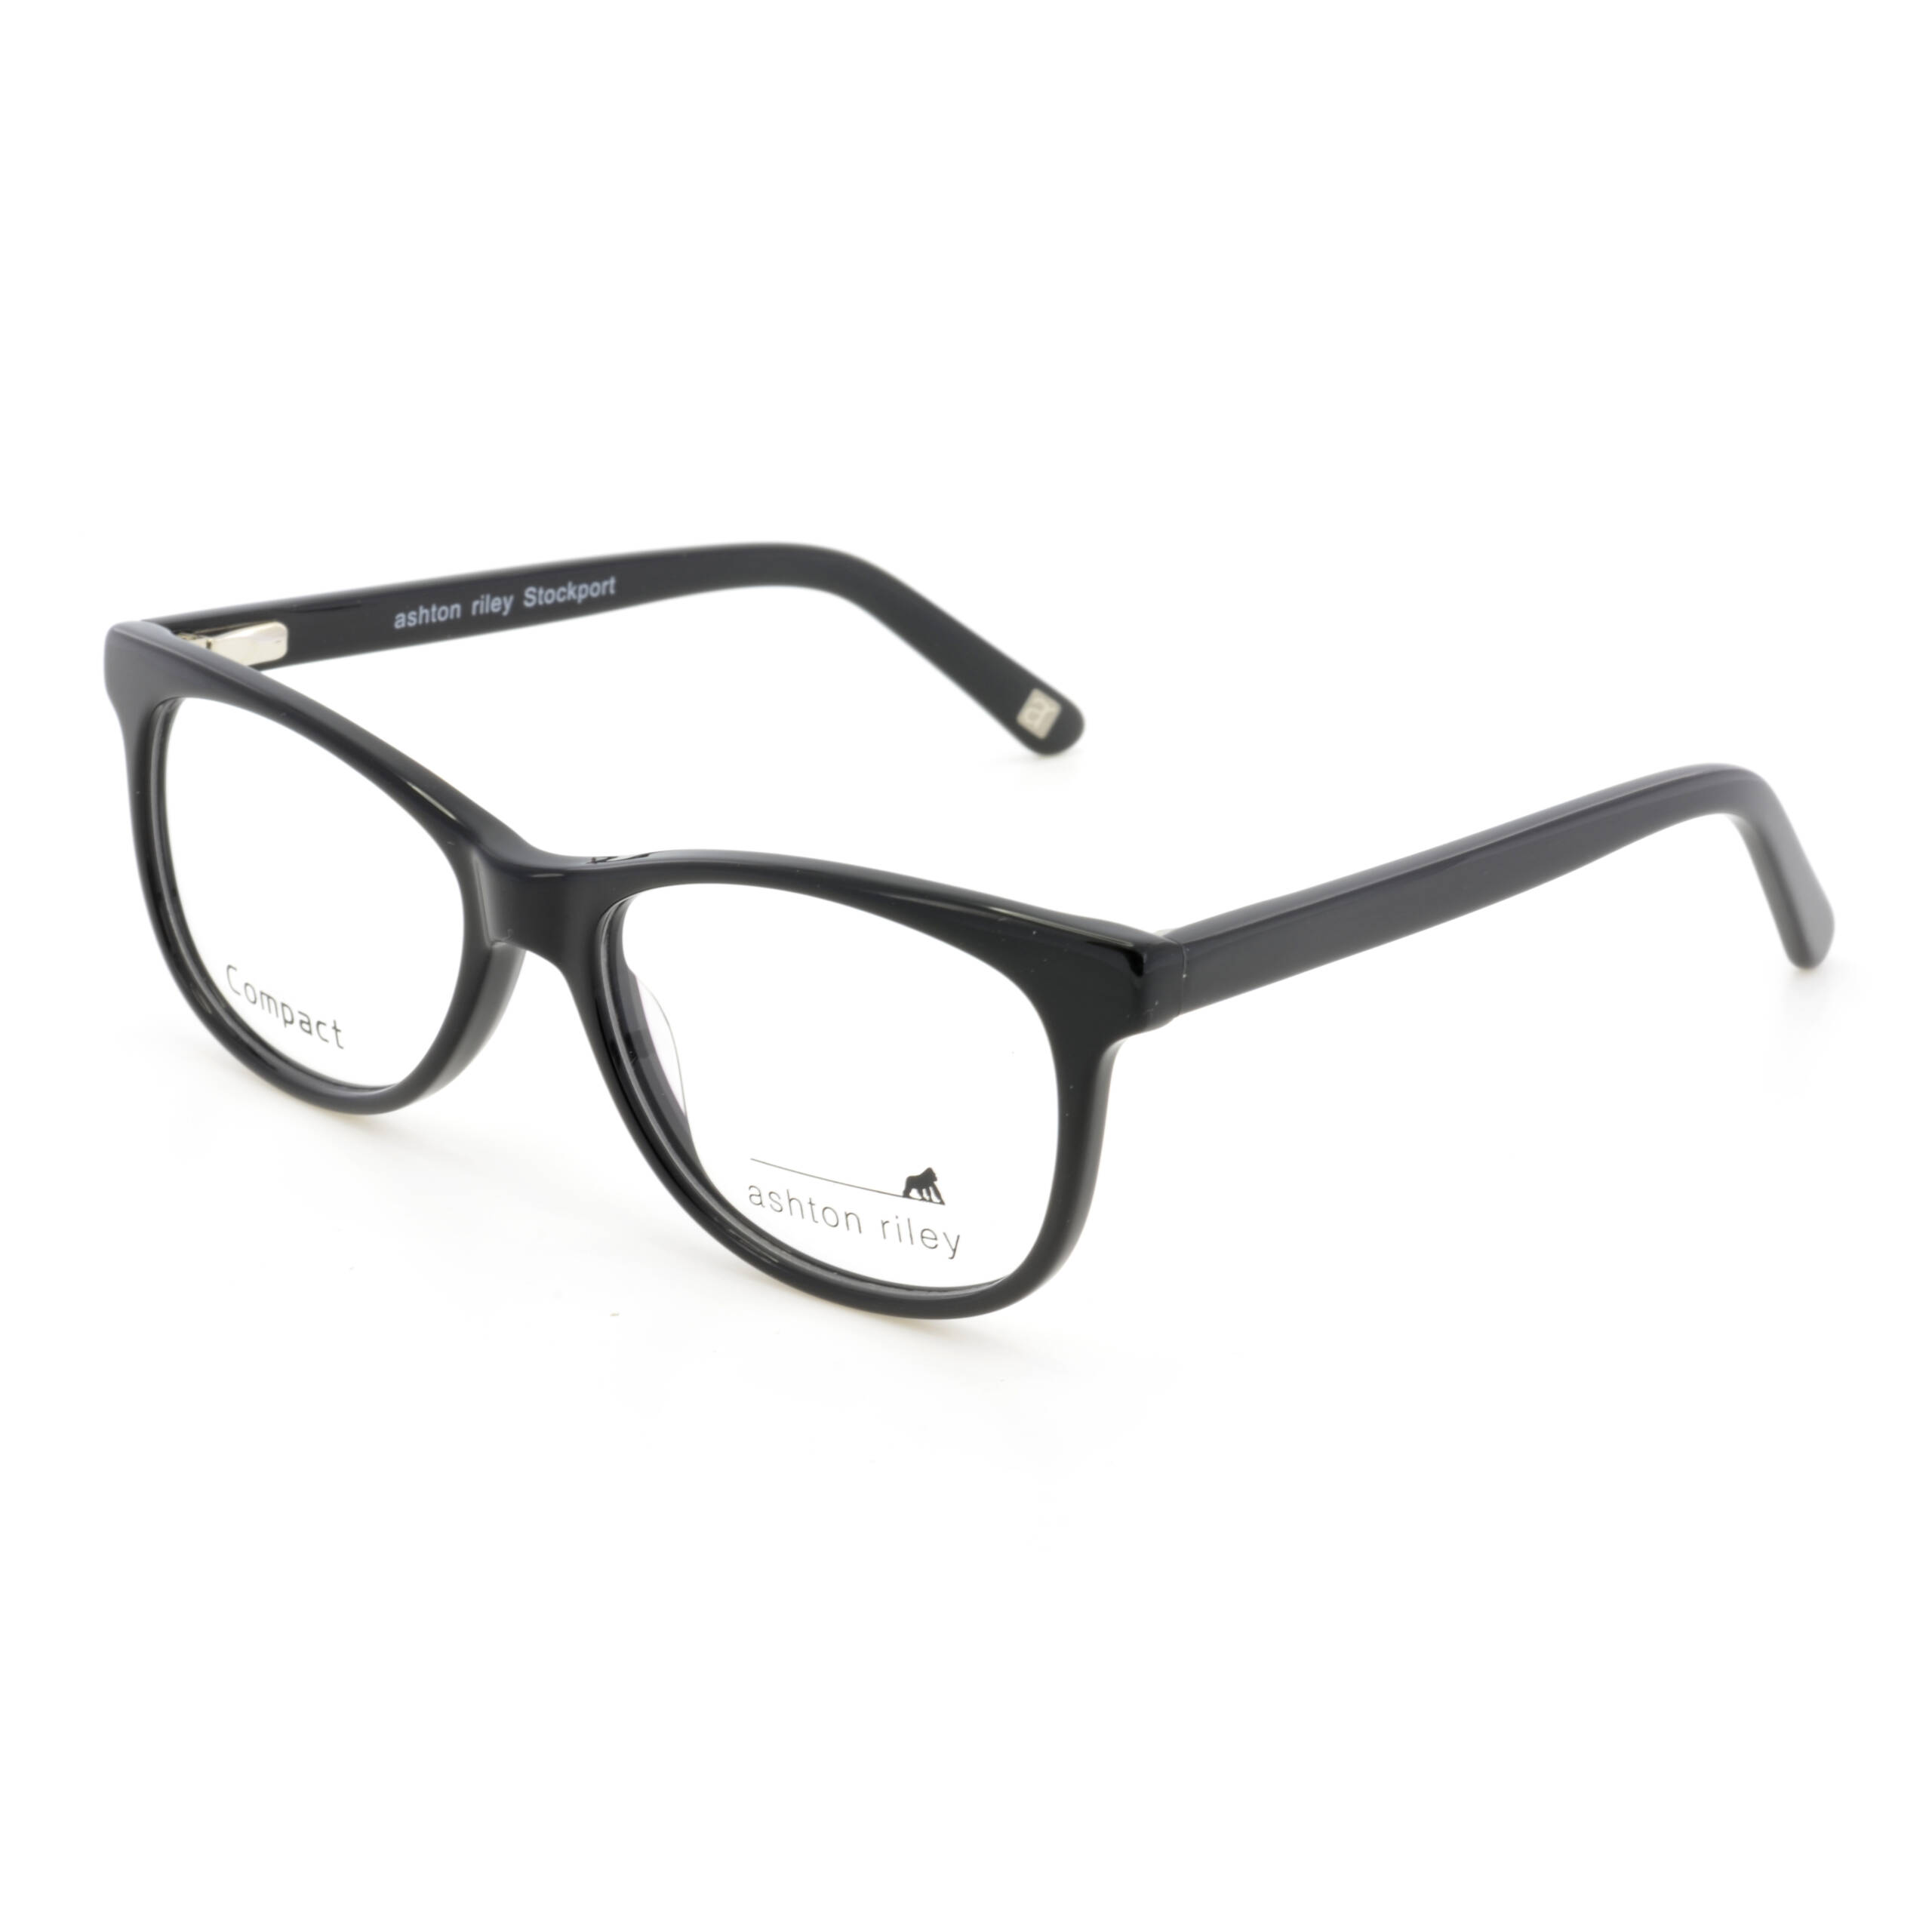 Stockport Compact – Ashton Riley Eyewear